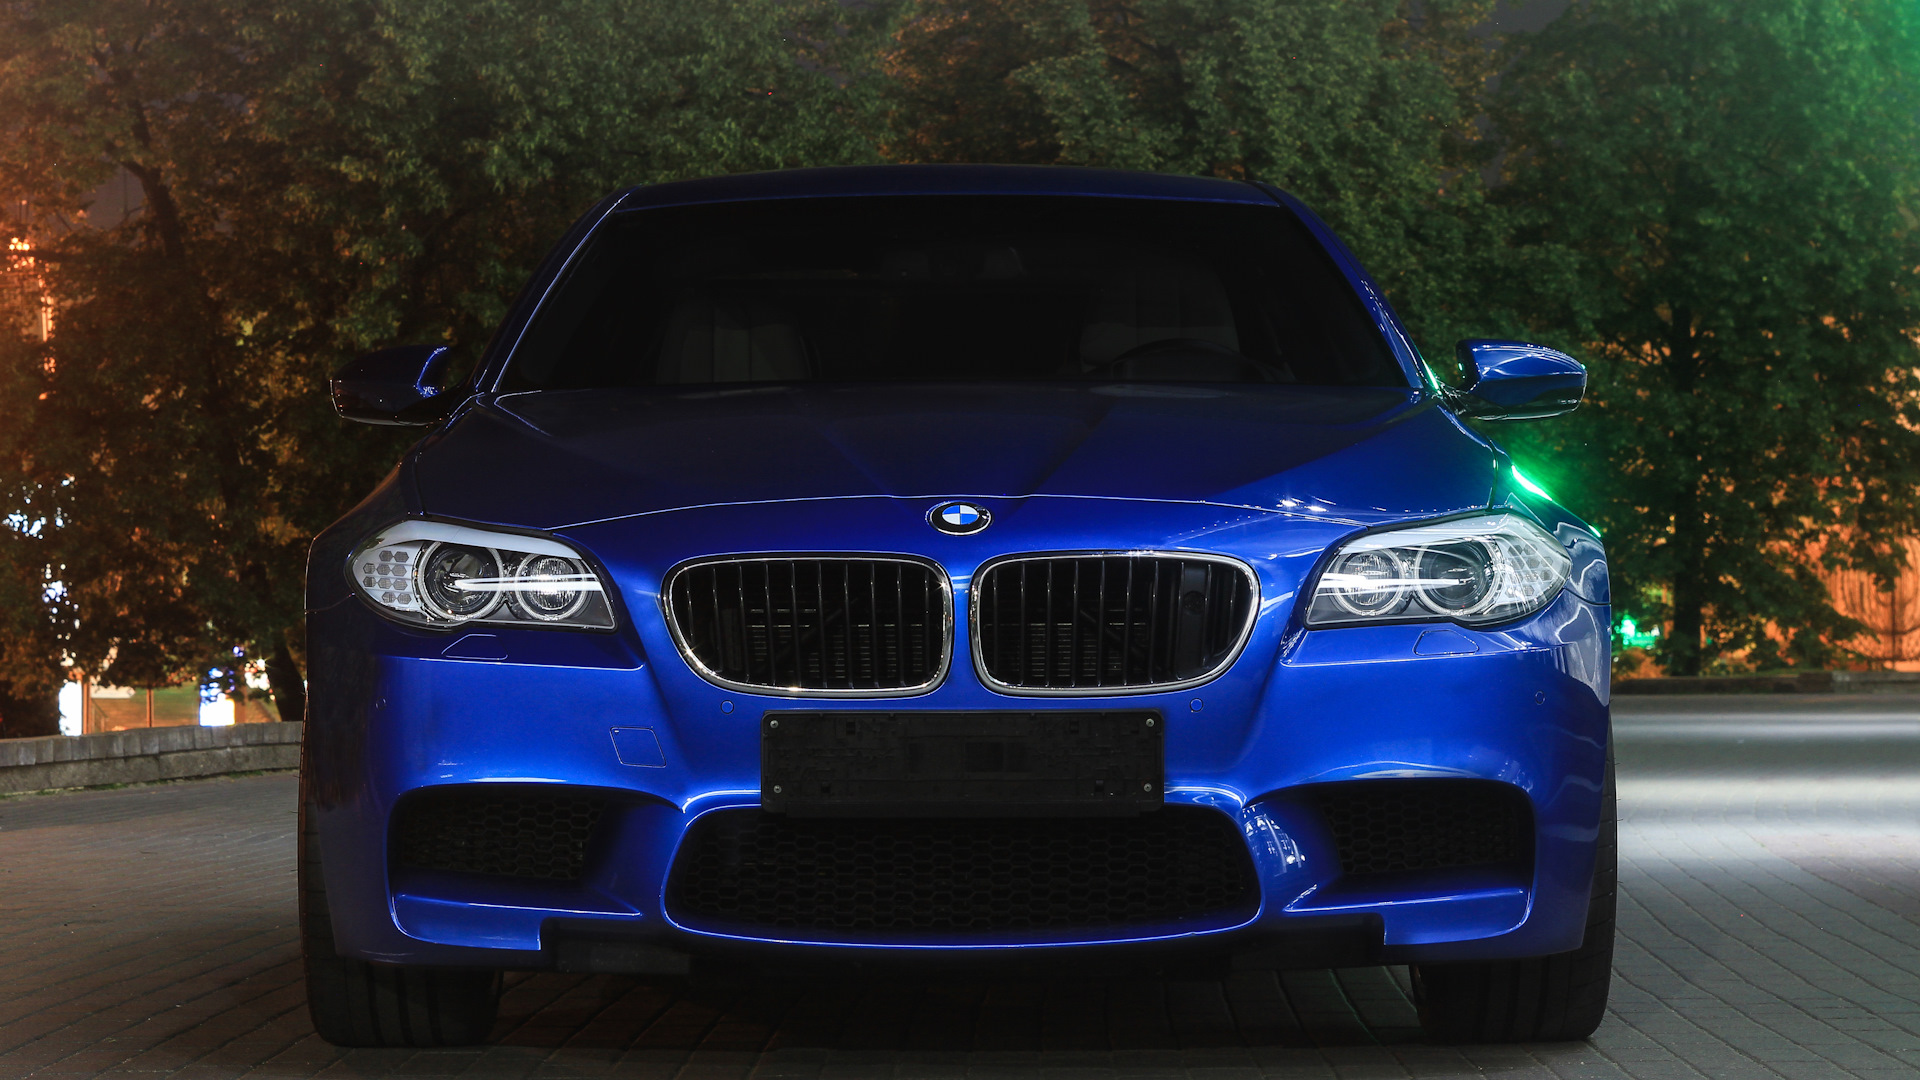 Аватарка бмв м5. BMW m5 f10. BMW m5 f10 m5. BMW m5 f10 синяя. BMW m5 f10 Night.